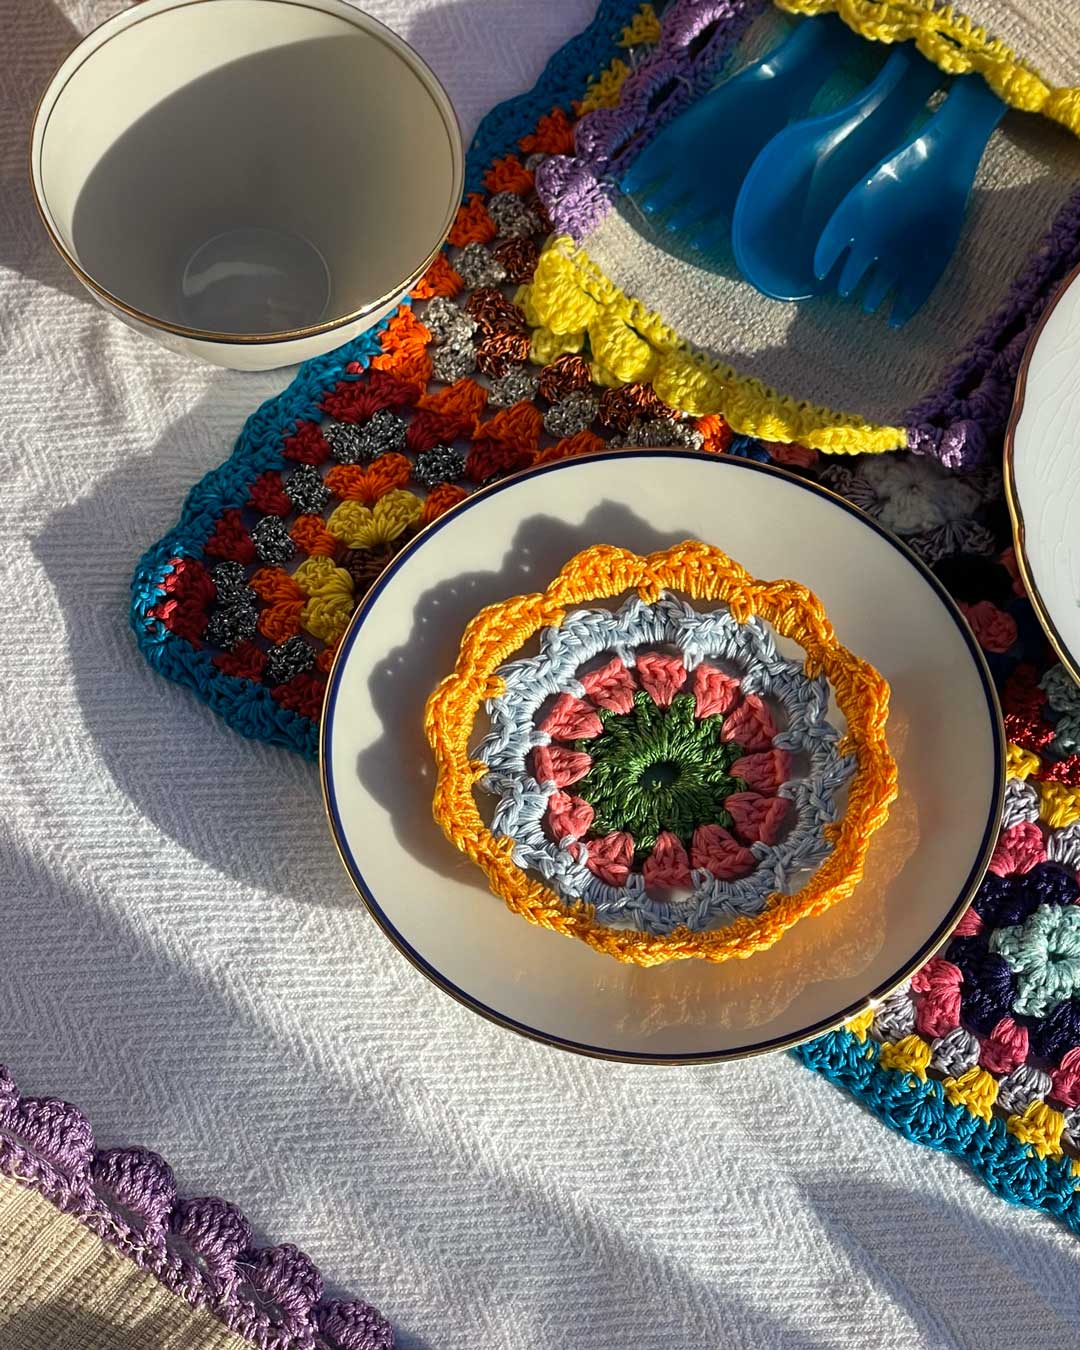 Handmade crochet coaster - Almace